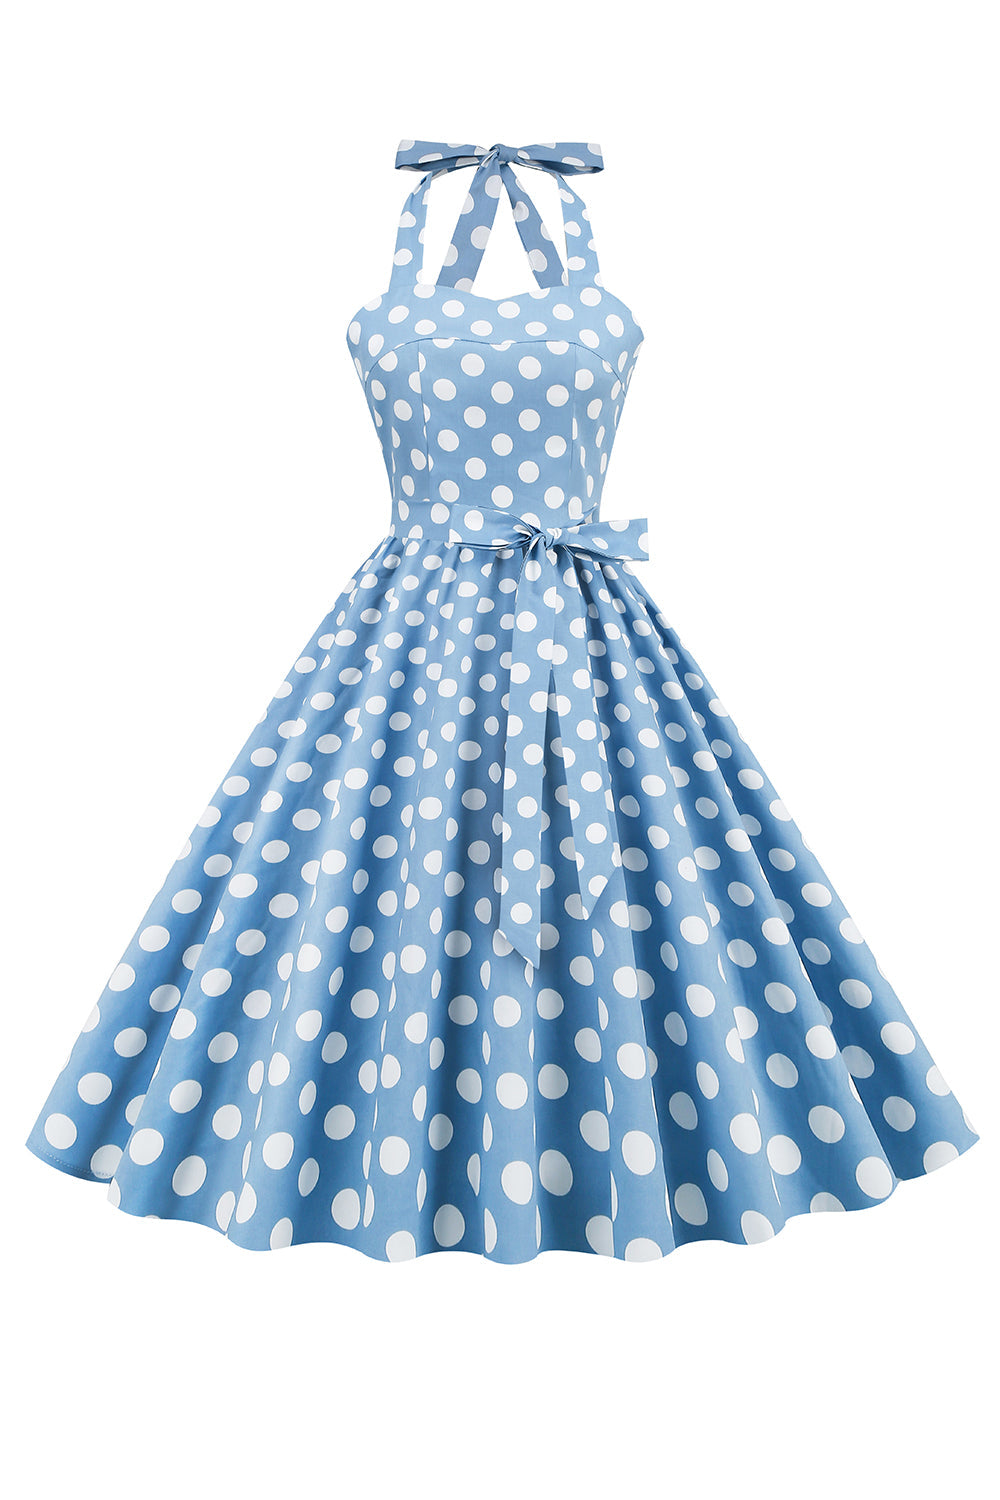 Robe Halter Blue Polka Dots années 50